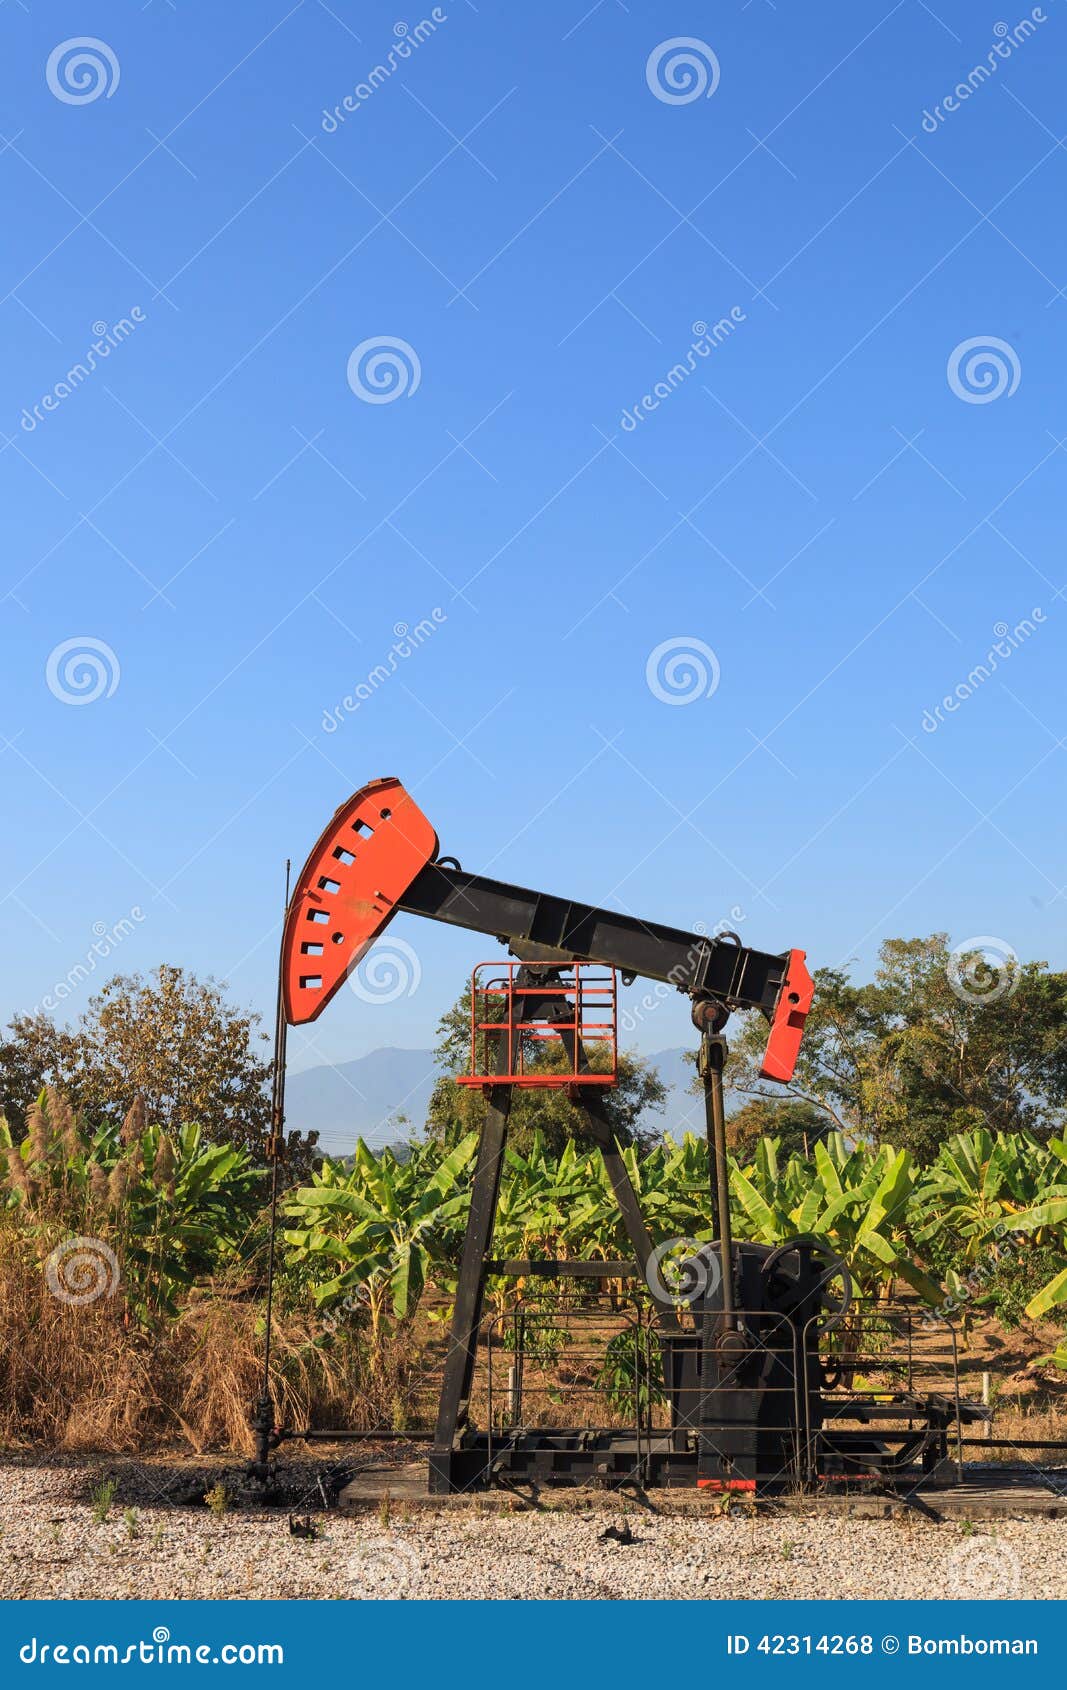 https://thumbs.dreamstime.com/z/oil-pump-jack-sucker-rod-beam-banana-field-sunny-day-gas-industry-42314268.jpg